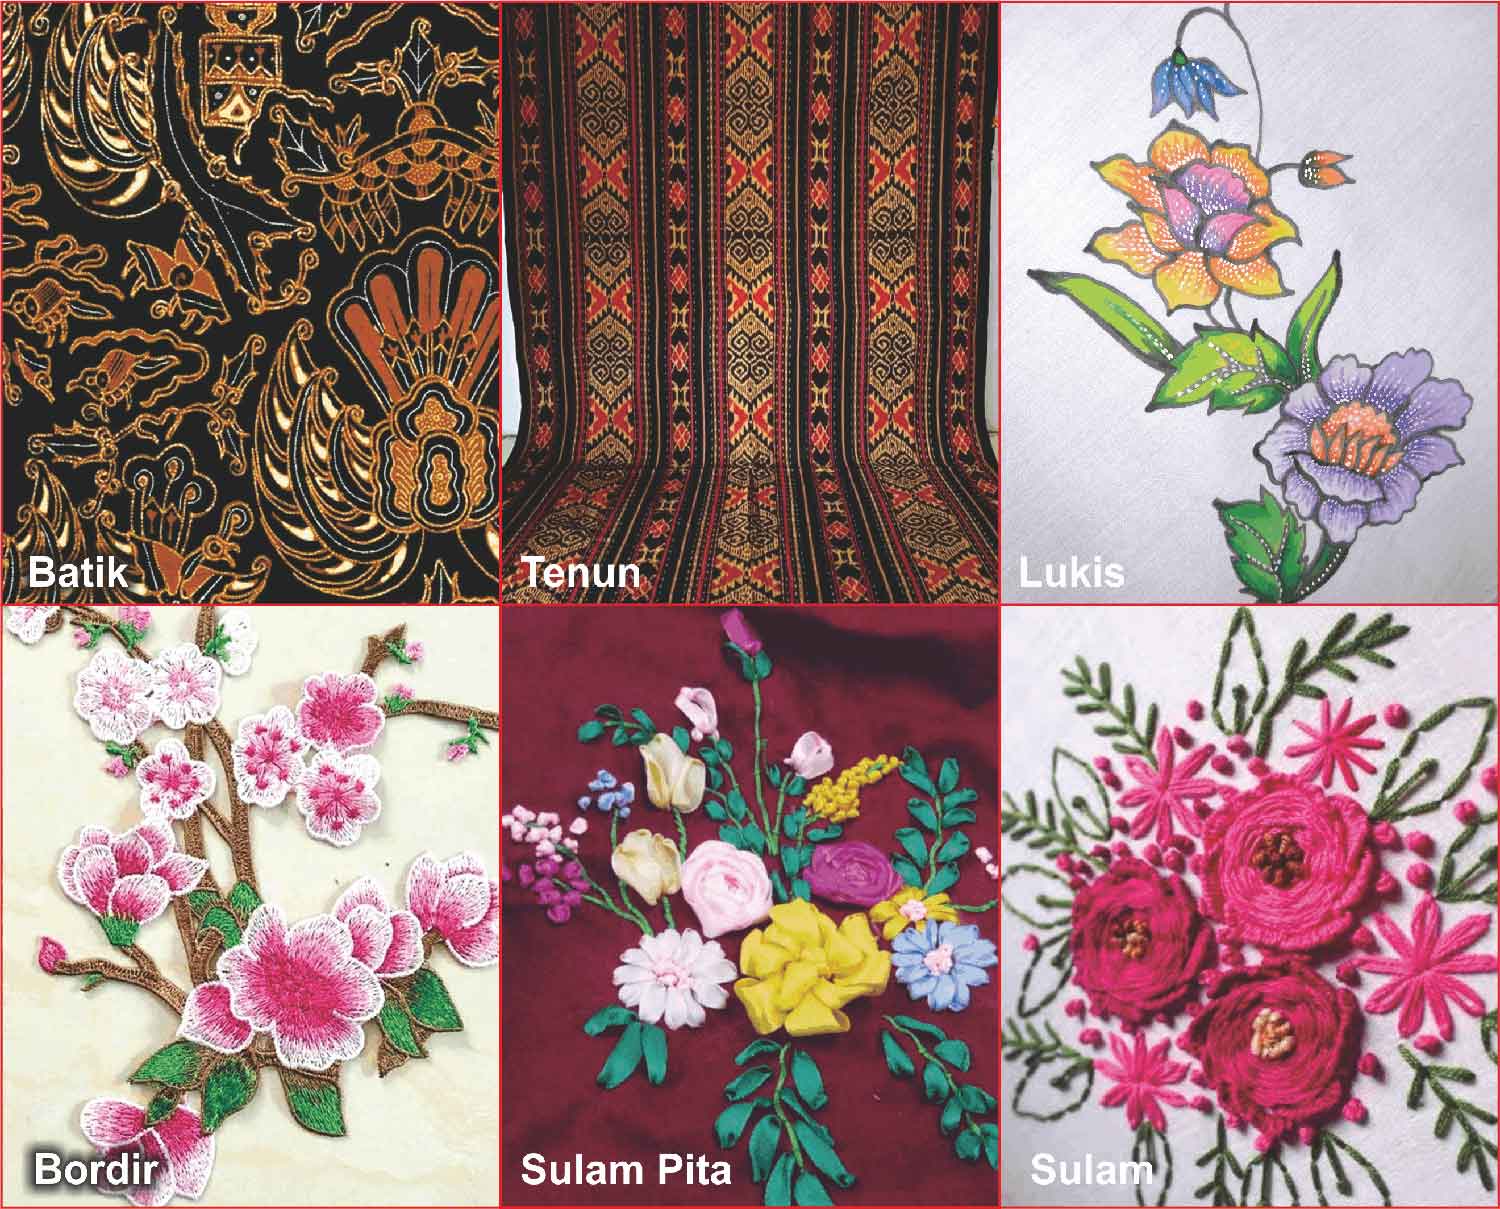 Ragam hias pada tekstil telah diterapkan di negara kita sejak lama. salah satu contohnya yaitu